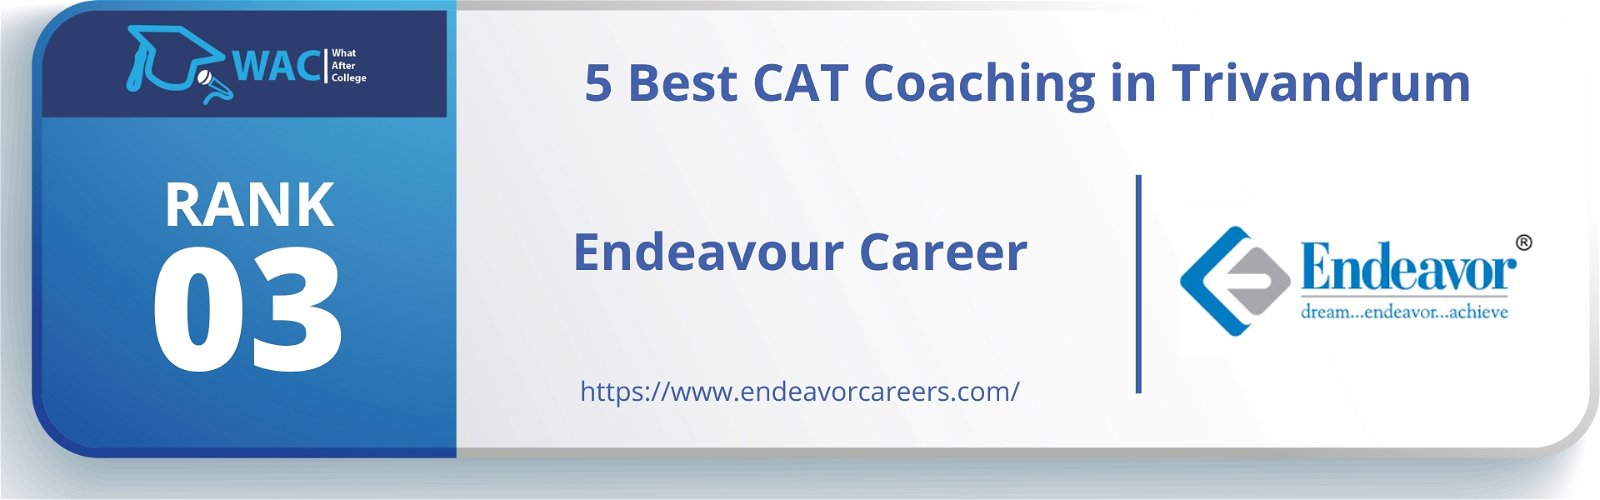 Endeavour Career